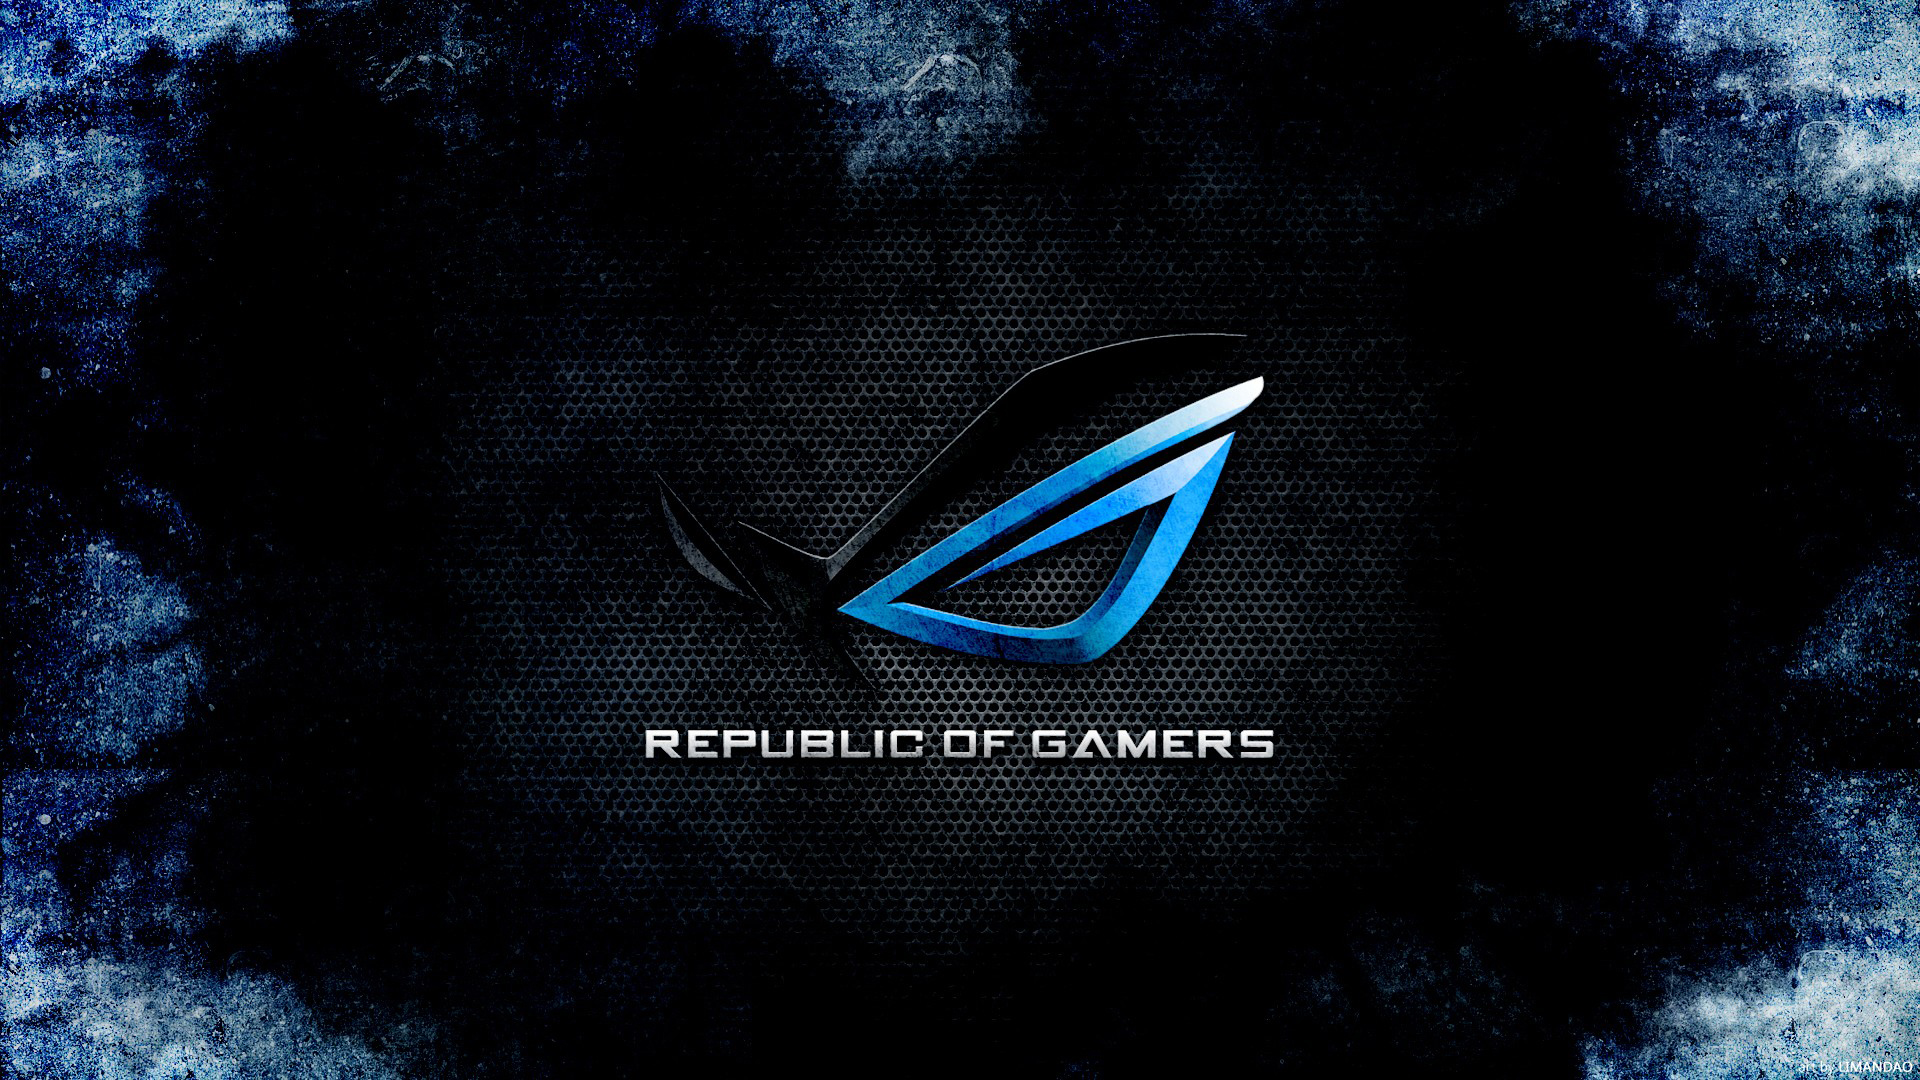 asus rog republic of gamers logo dark blue hd 1920x1080 1080p